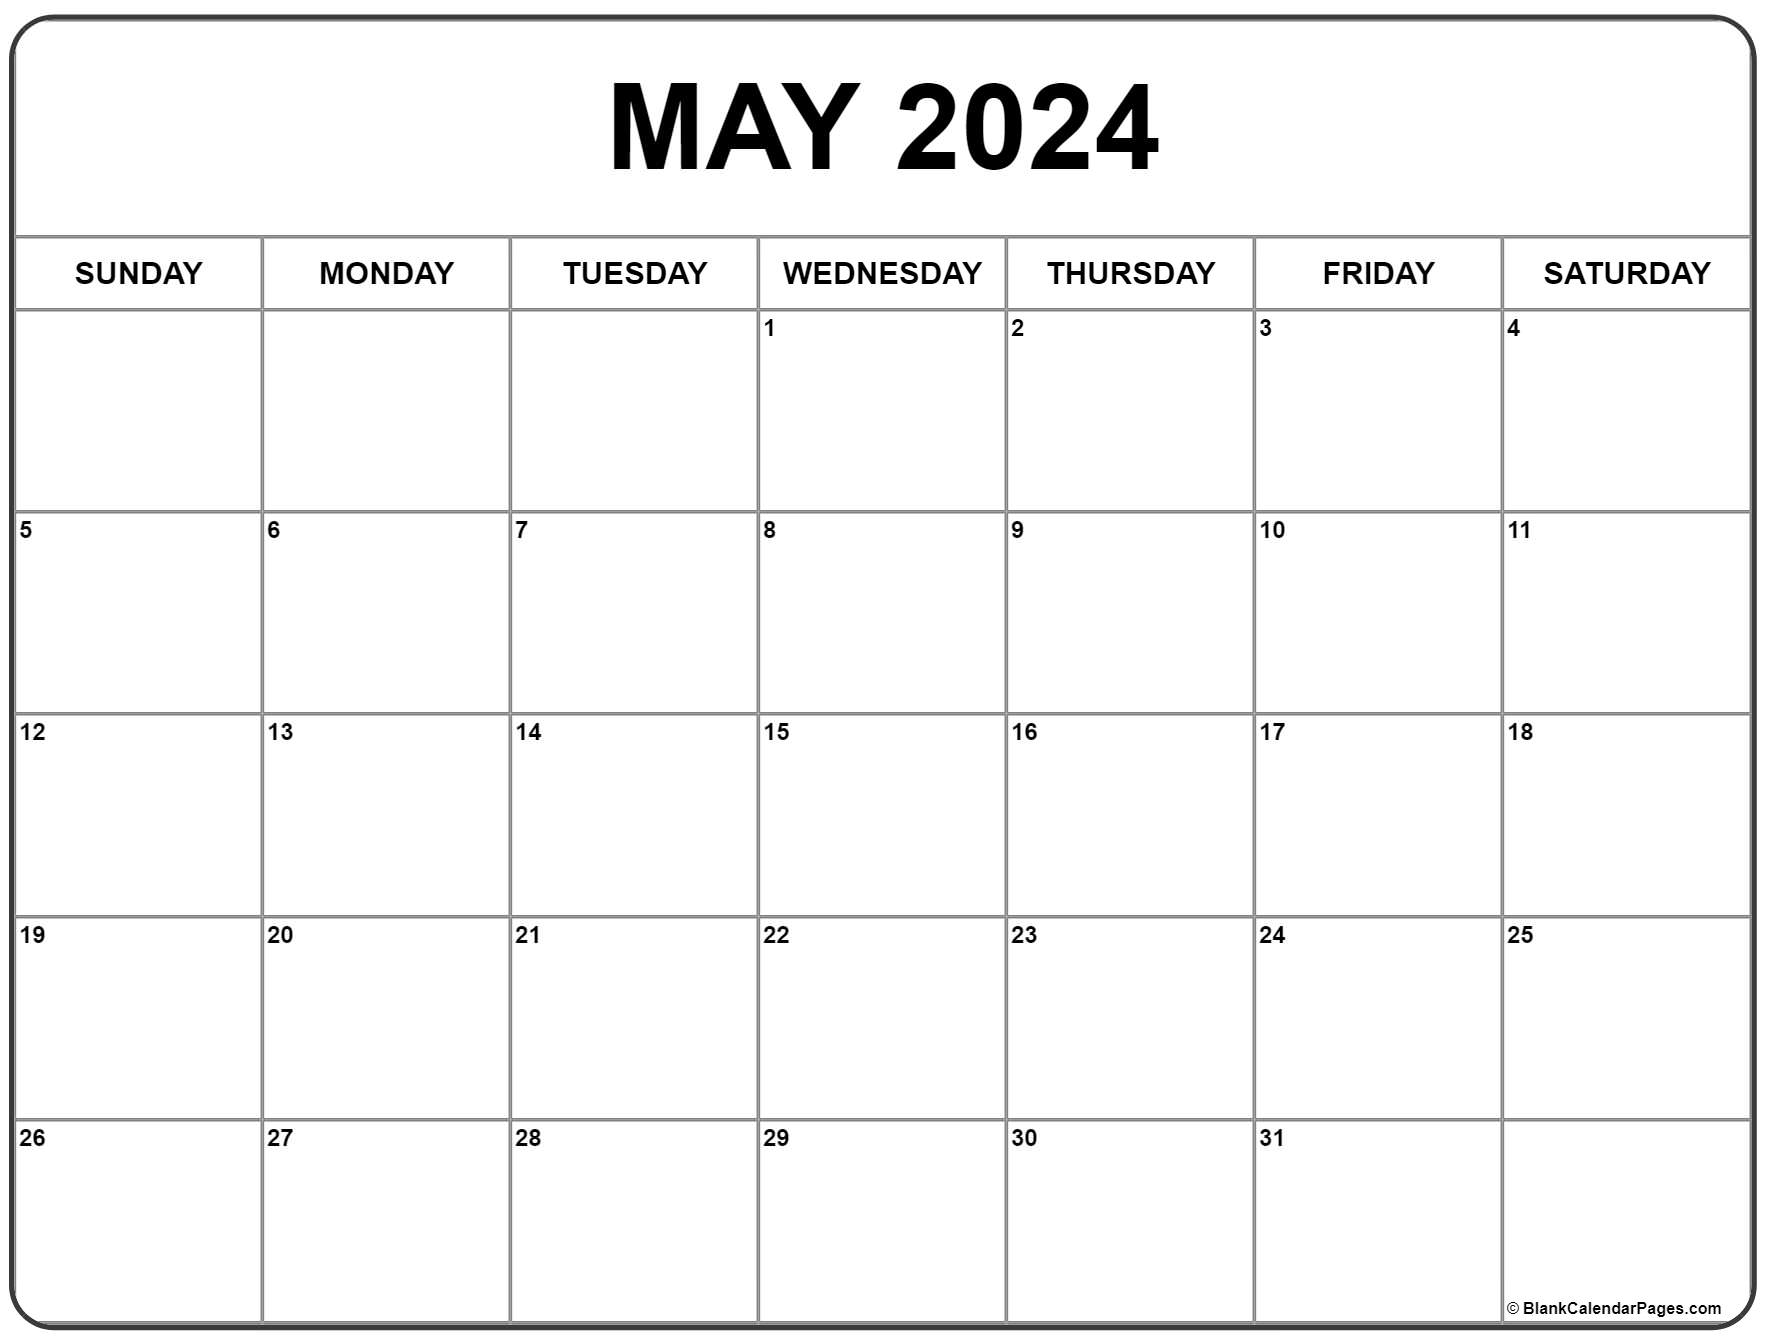 May 2024 Calendar | Free Printable Calendar for Free Printable Monthly Calendar May 2024